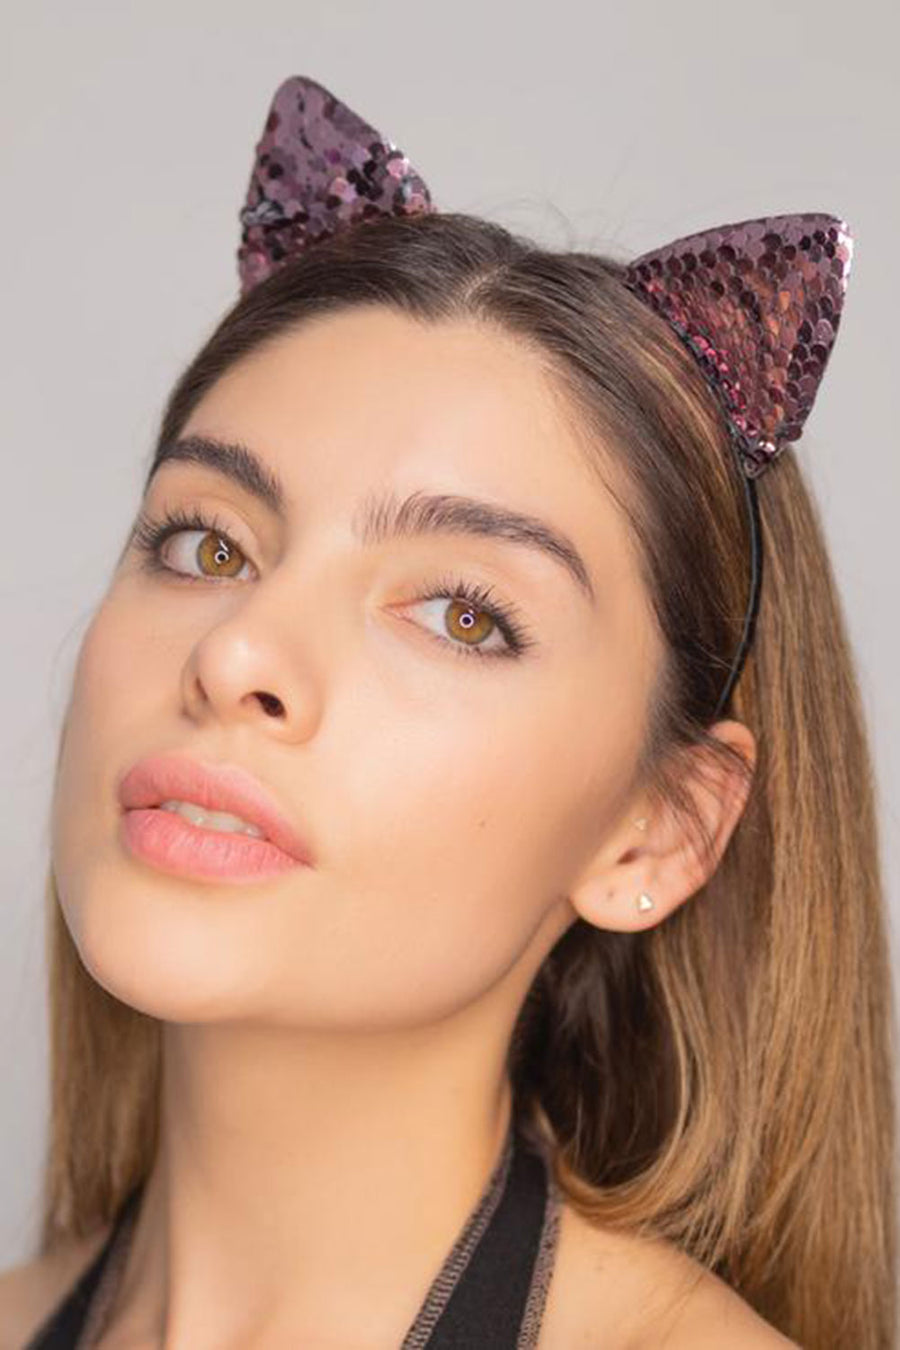 Meow! Cat Ears Headbands Sequins Headbands, Set of 2 - Vacay Land 